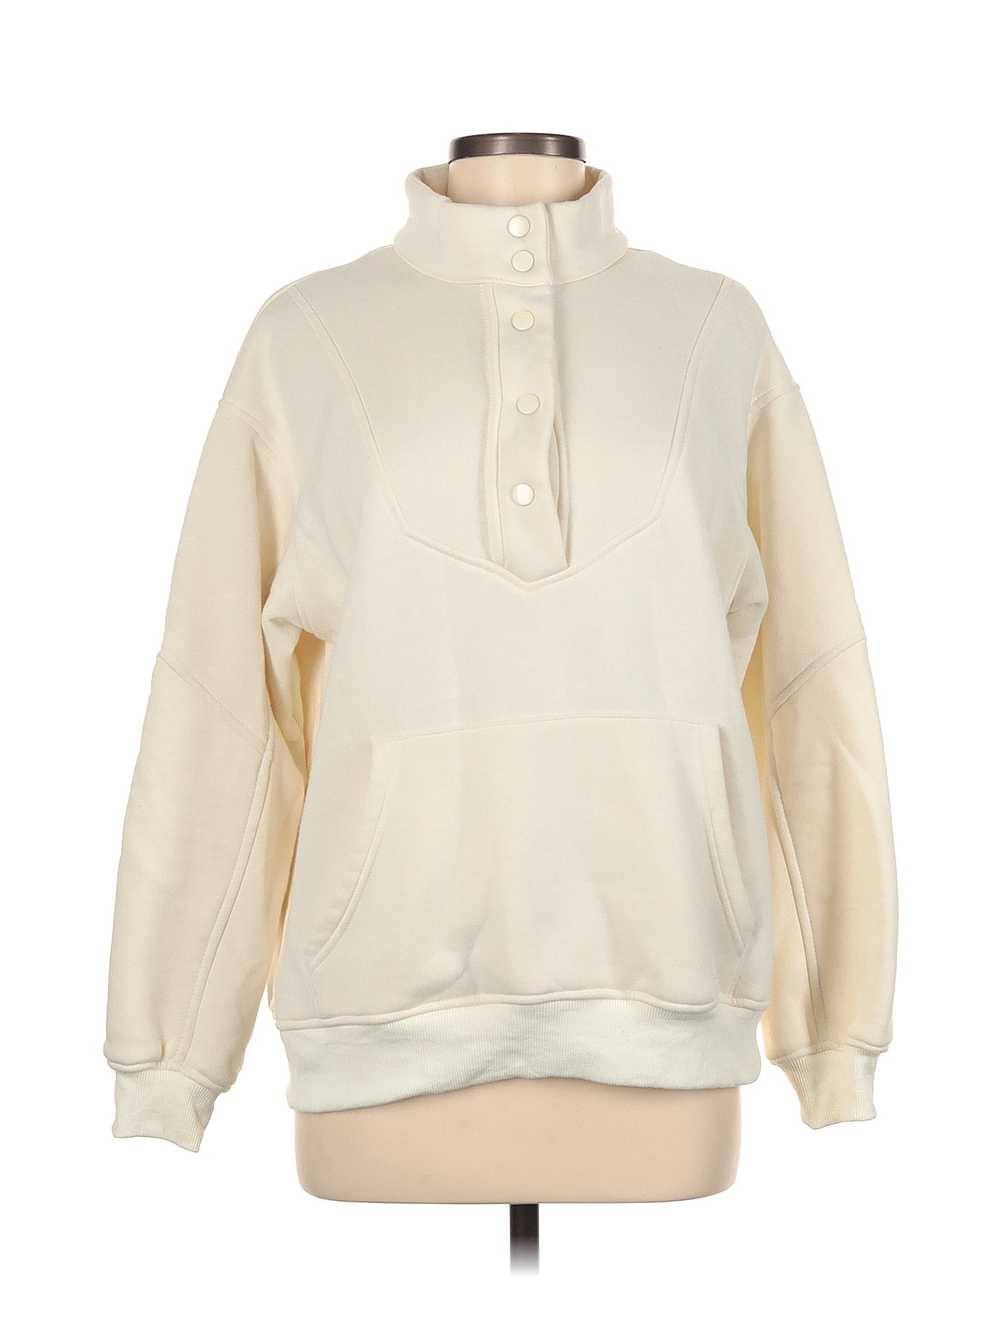 Assorted Brands Women Ivory Sweatshirt M - image 1